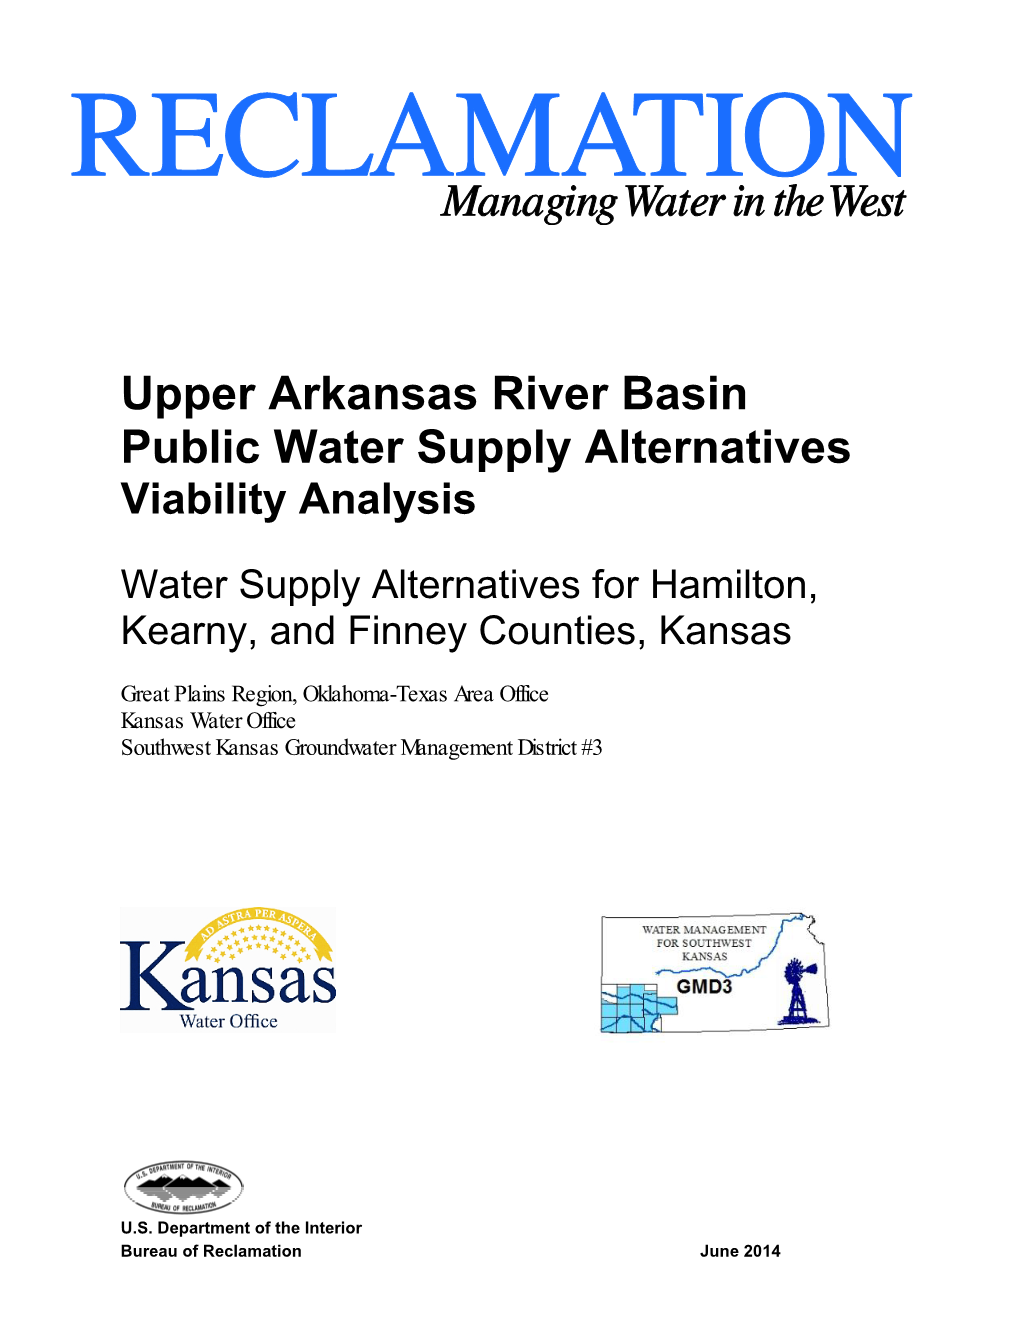 Upper Arkansas River Basin Public Water Supply Alternatives Viability Analysis